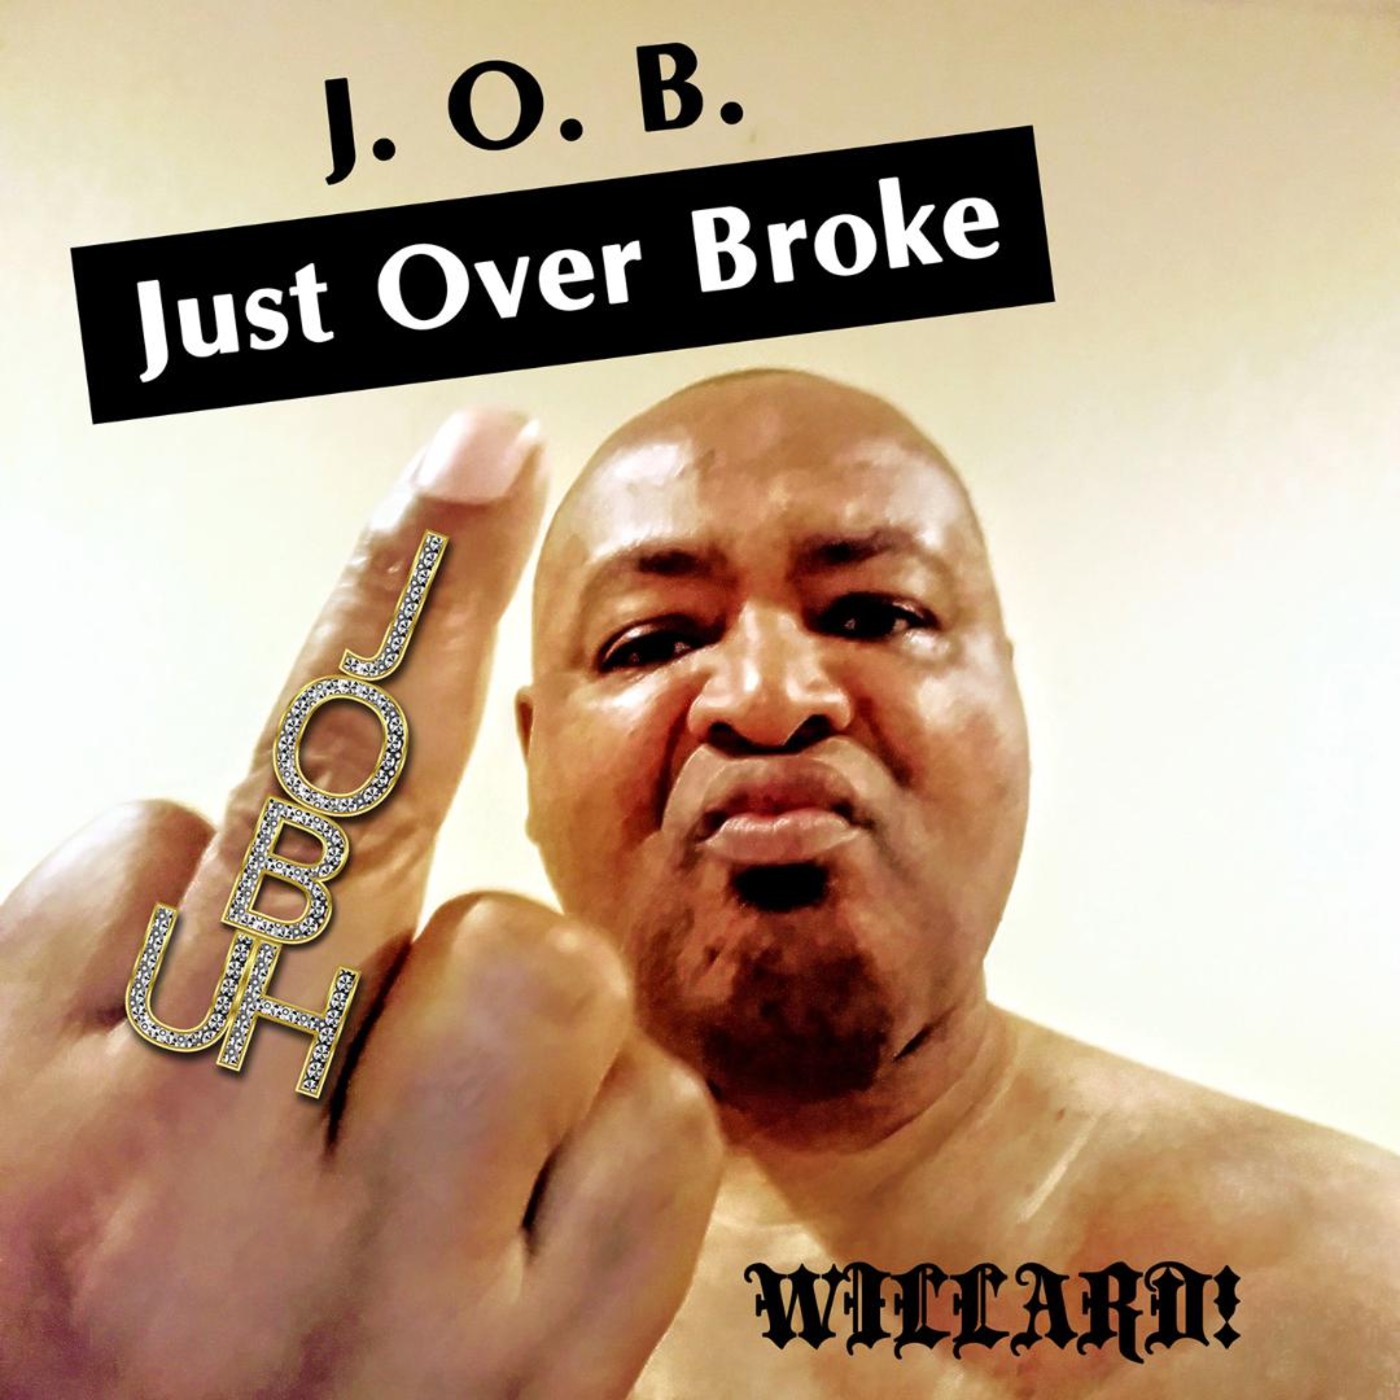 Wilard! - Fuck Uh Job!